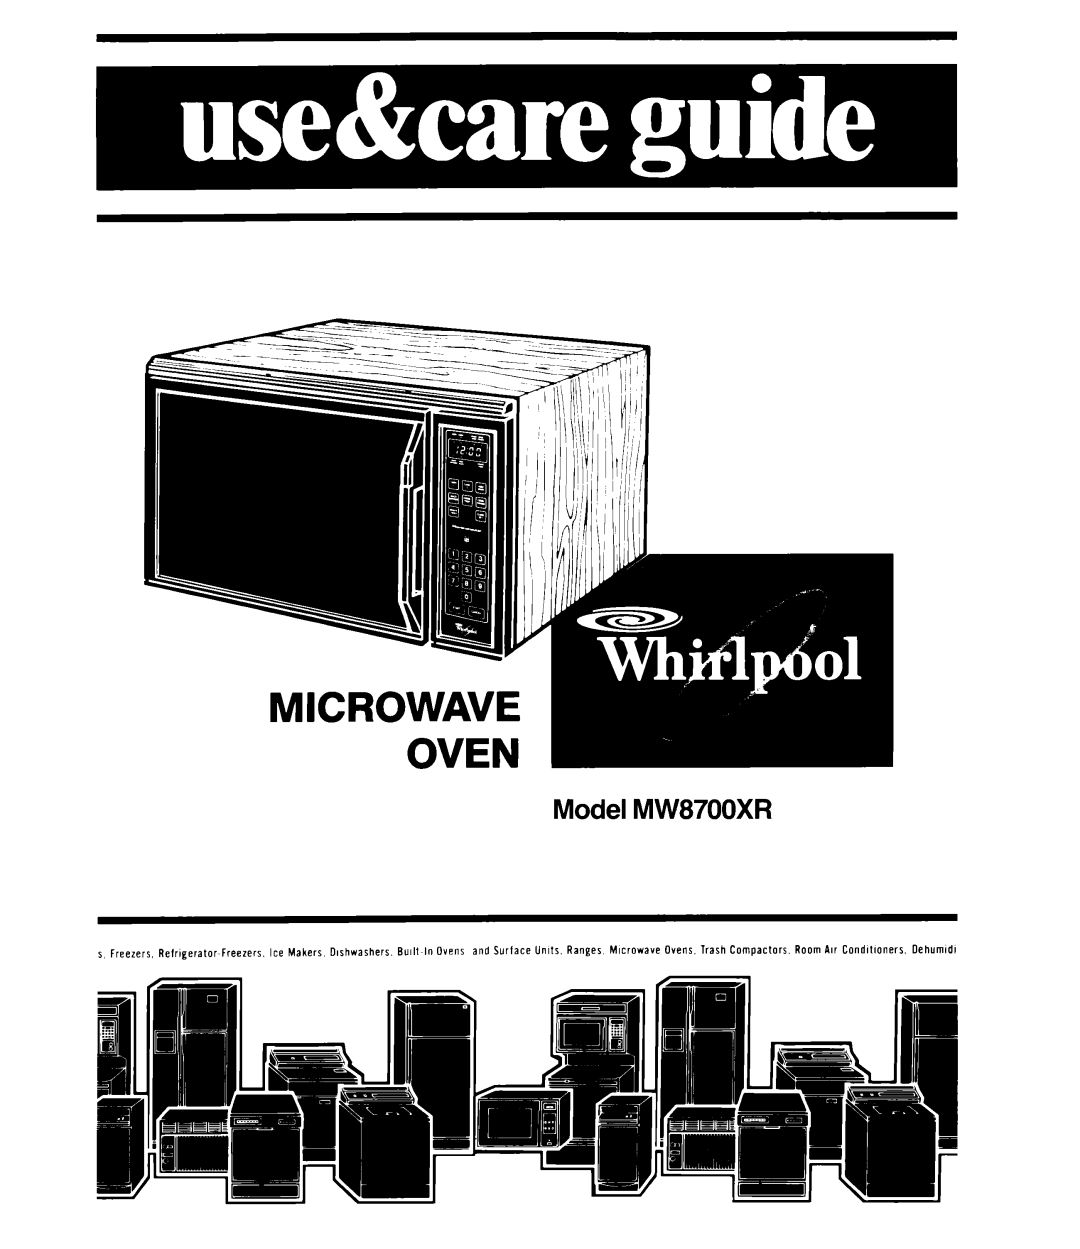 Whirlpool manual Model MW8700XR, s, Freezers, Relrlgerator~Fteezets, Ice Makers, Dishwashers, Units. Ranges, Microwave 